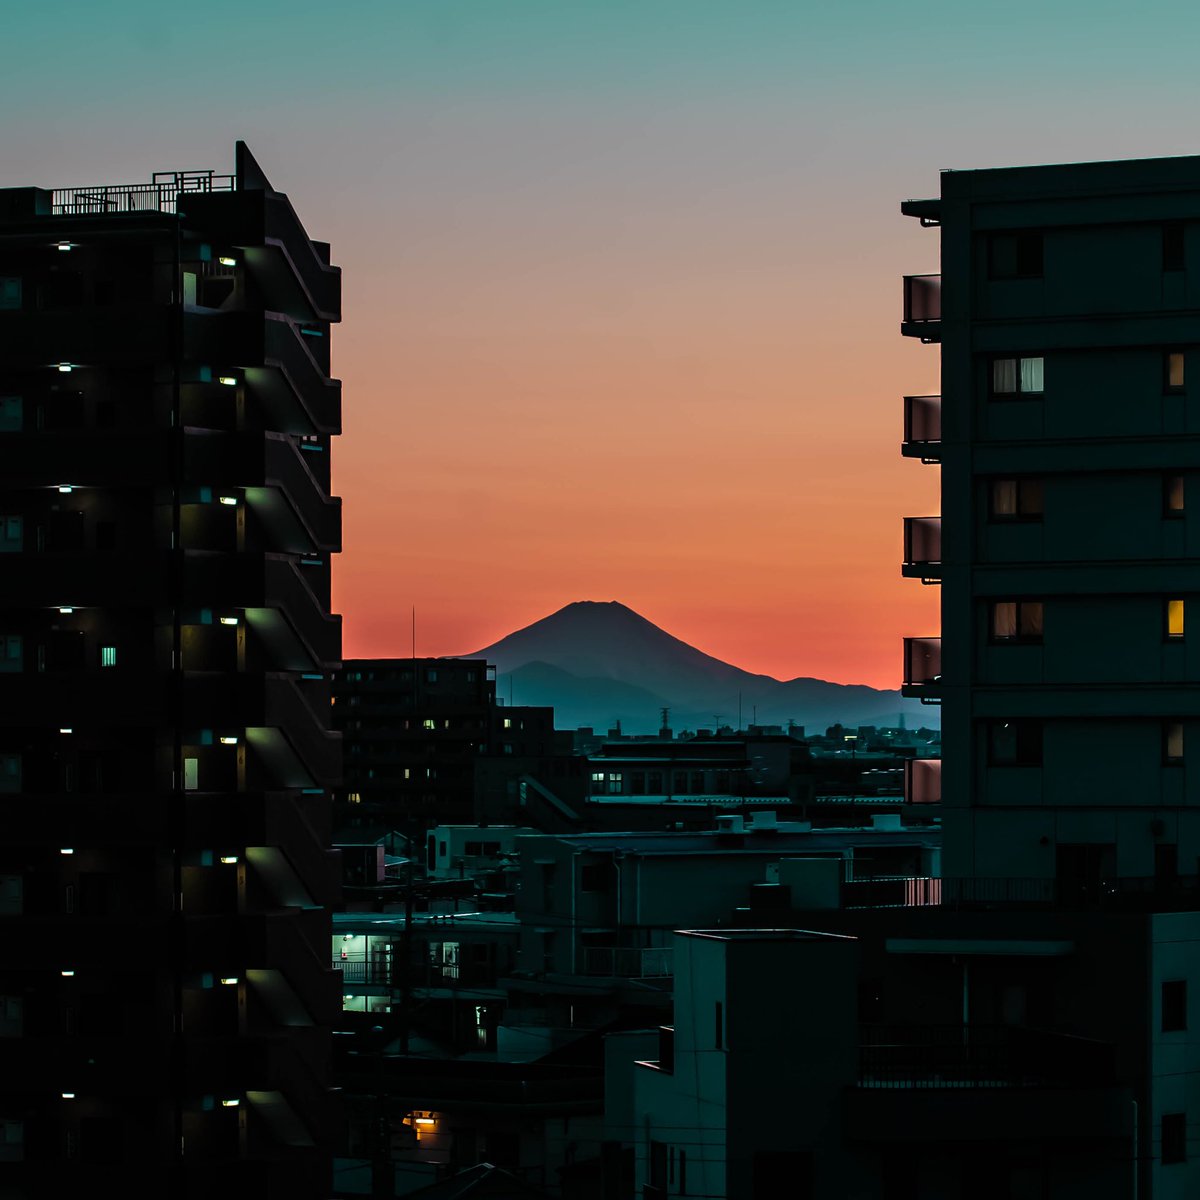 Mt.FUJI
#sunrise_pics #sunrise #sunset #aroundworld #sungoesup #sunrising #risingsun #morning #twilight #sony #a7 #海 #空 #風景 #景色 #富士山